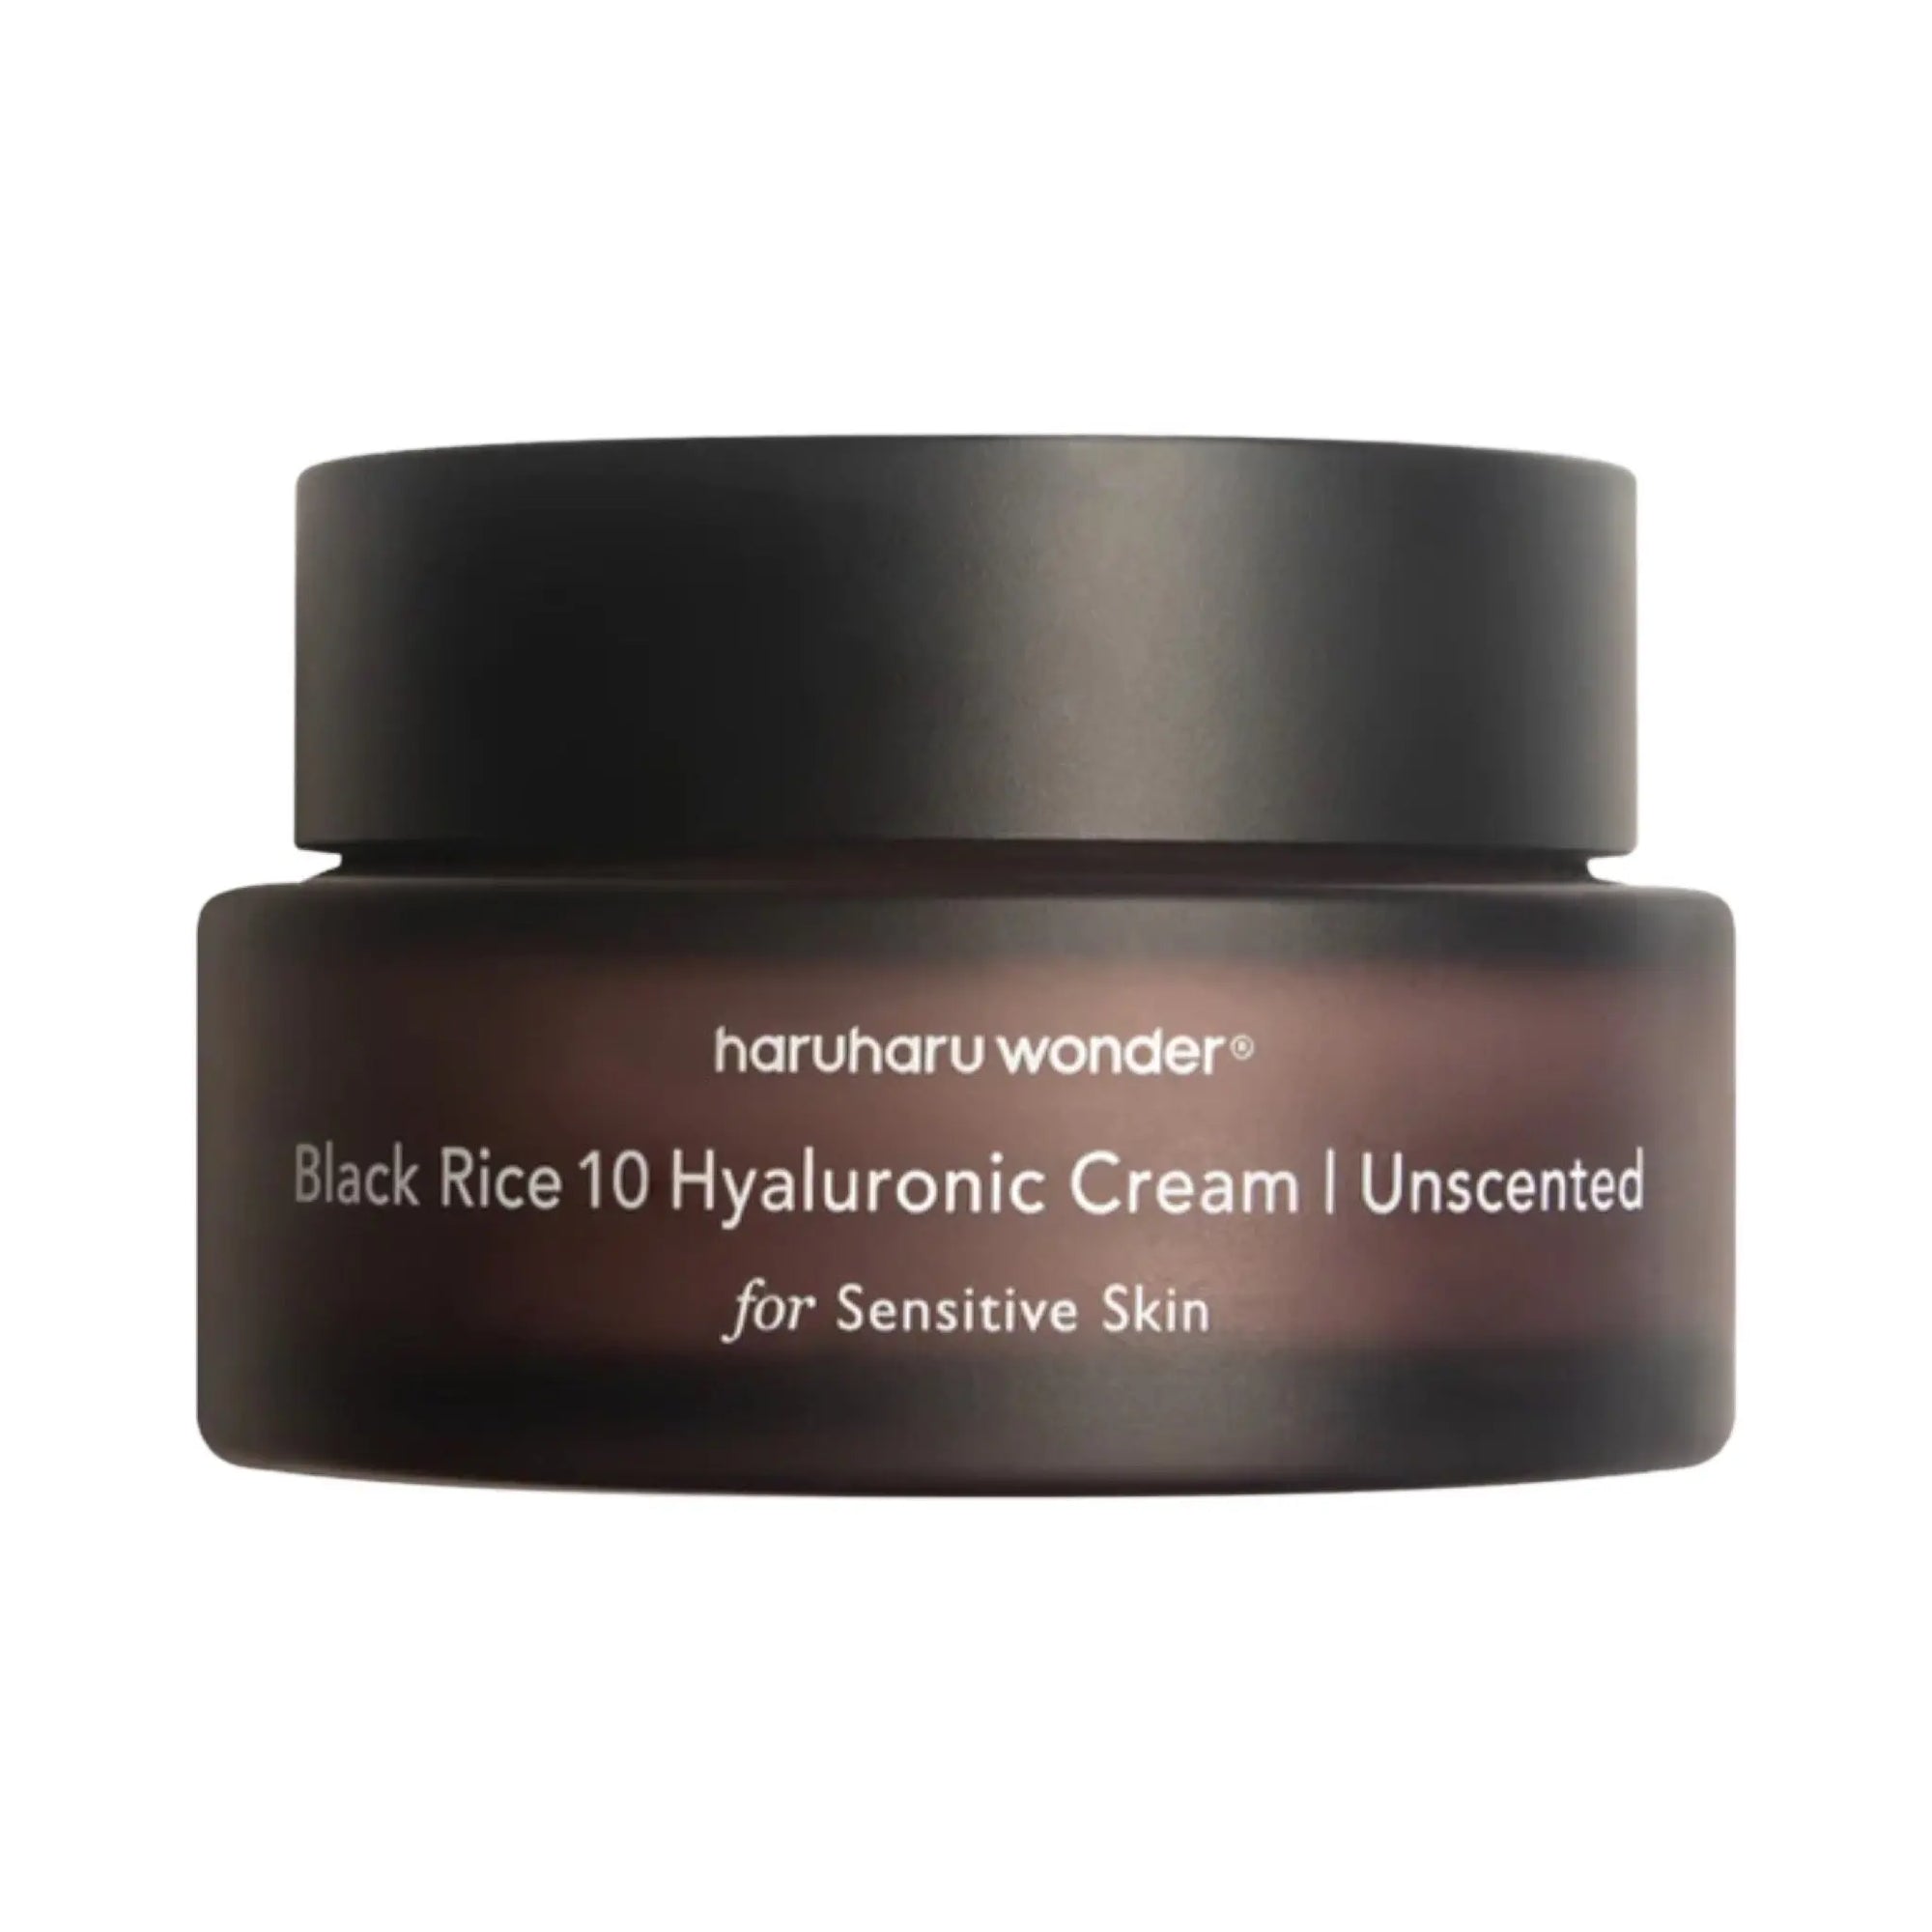 Haruharu Wonder - Black Rice 10 Hyaluronic Cream Unscented for Sensitive Skin 50mL Haruharu Wonder